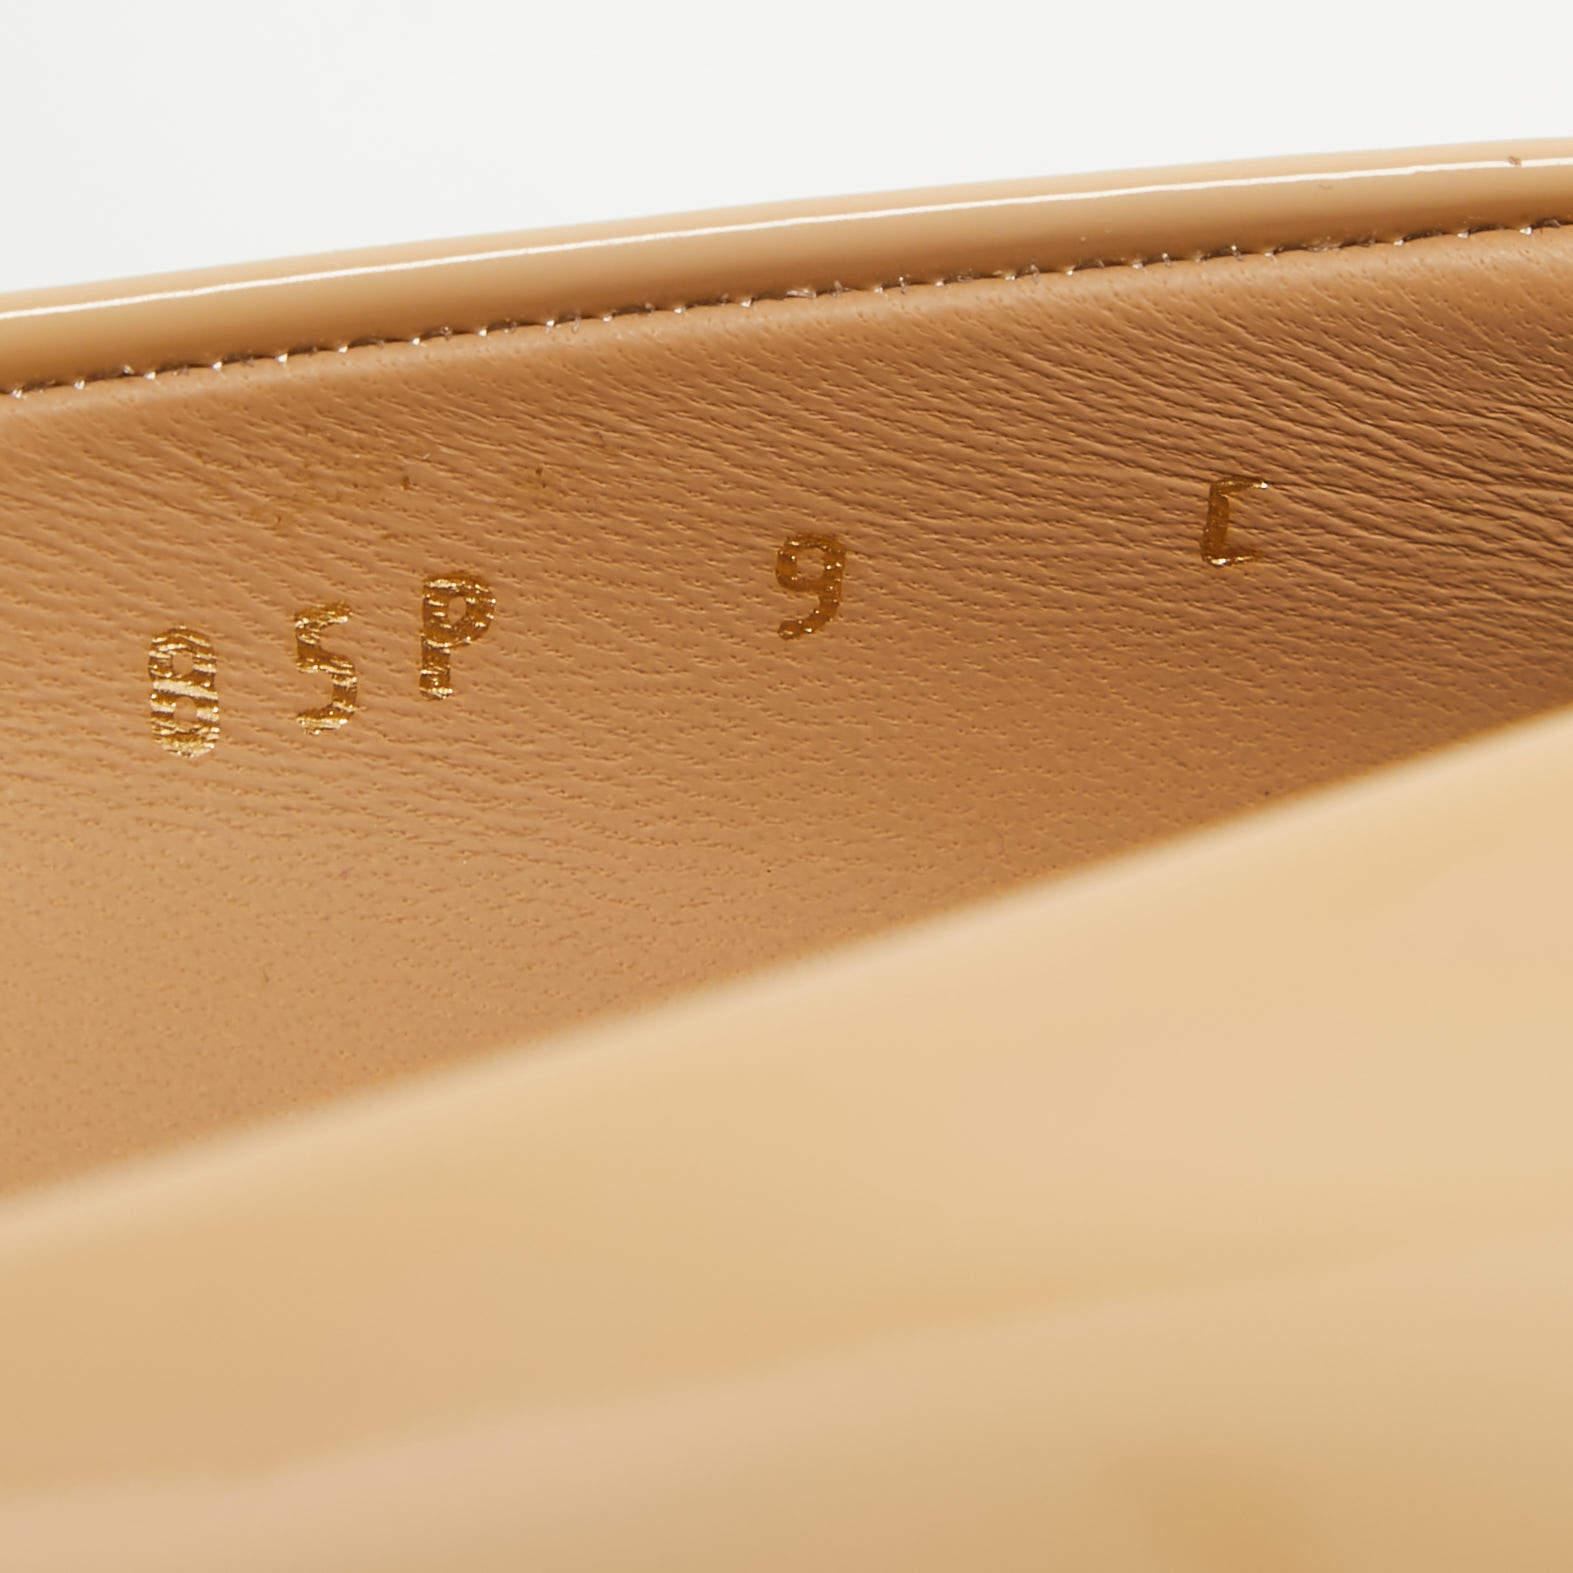 Salvatore Ferragamo Beige Patent Leather Vara Bow Pumps Size 39.5 2